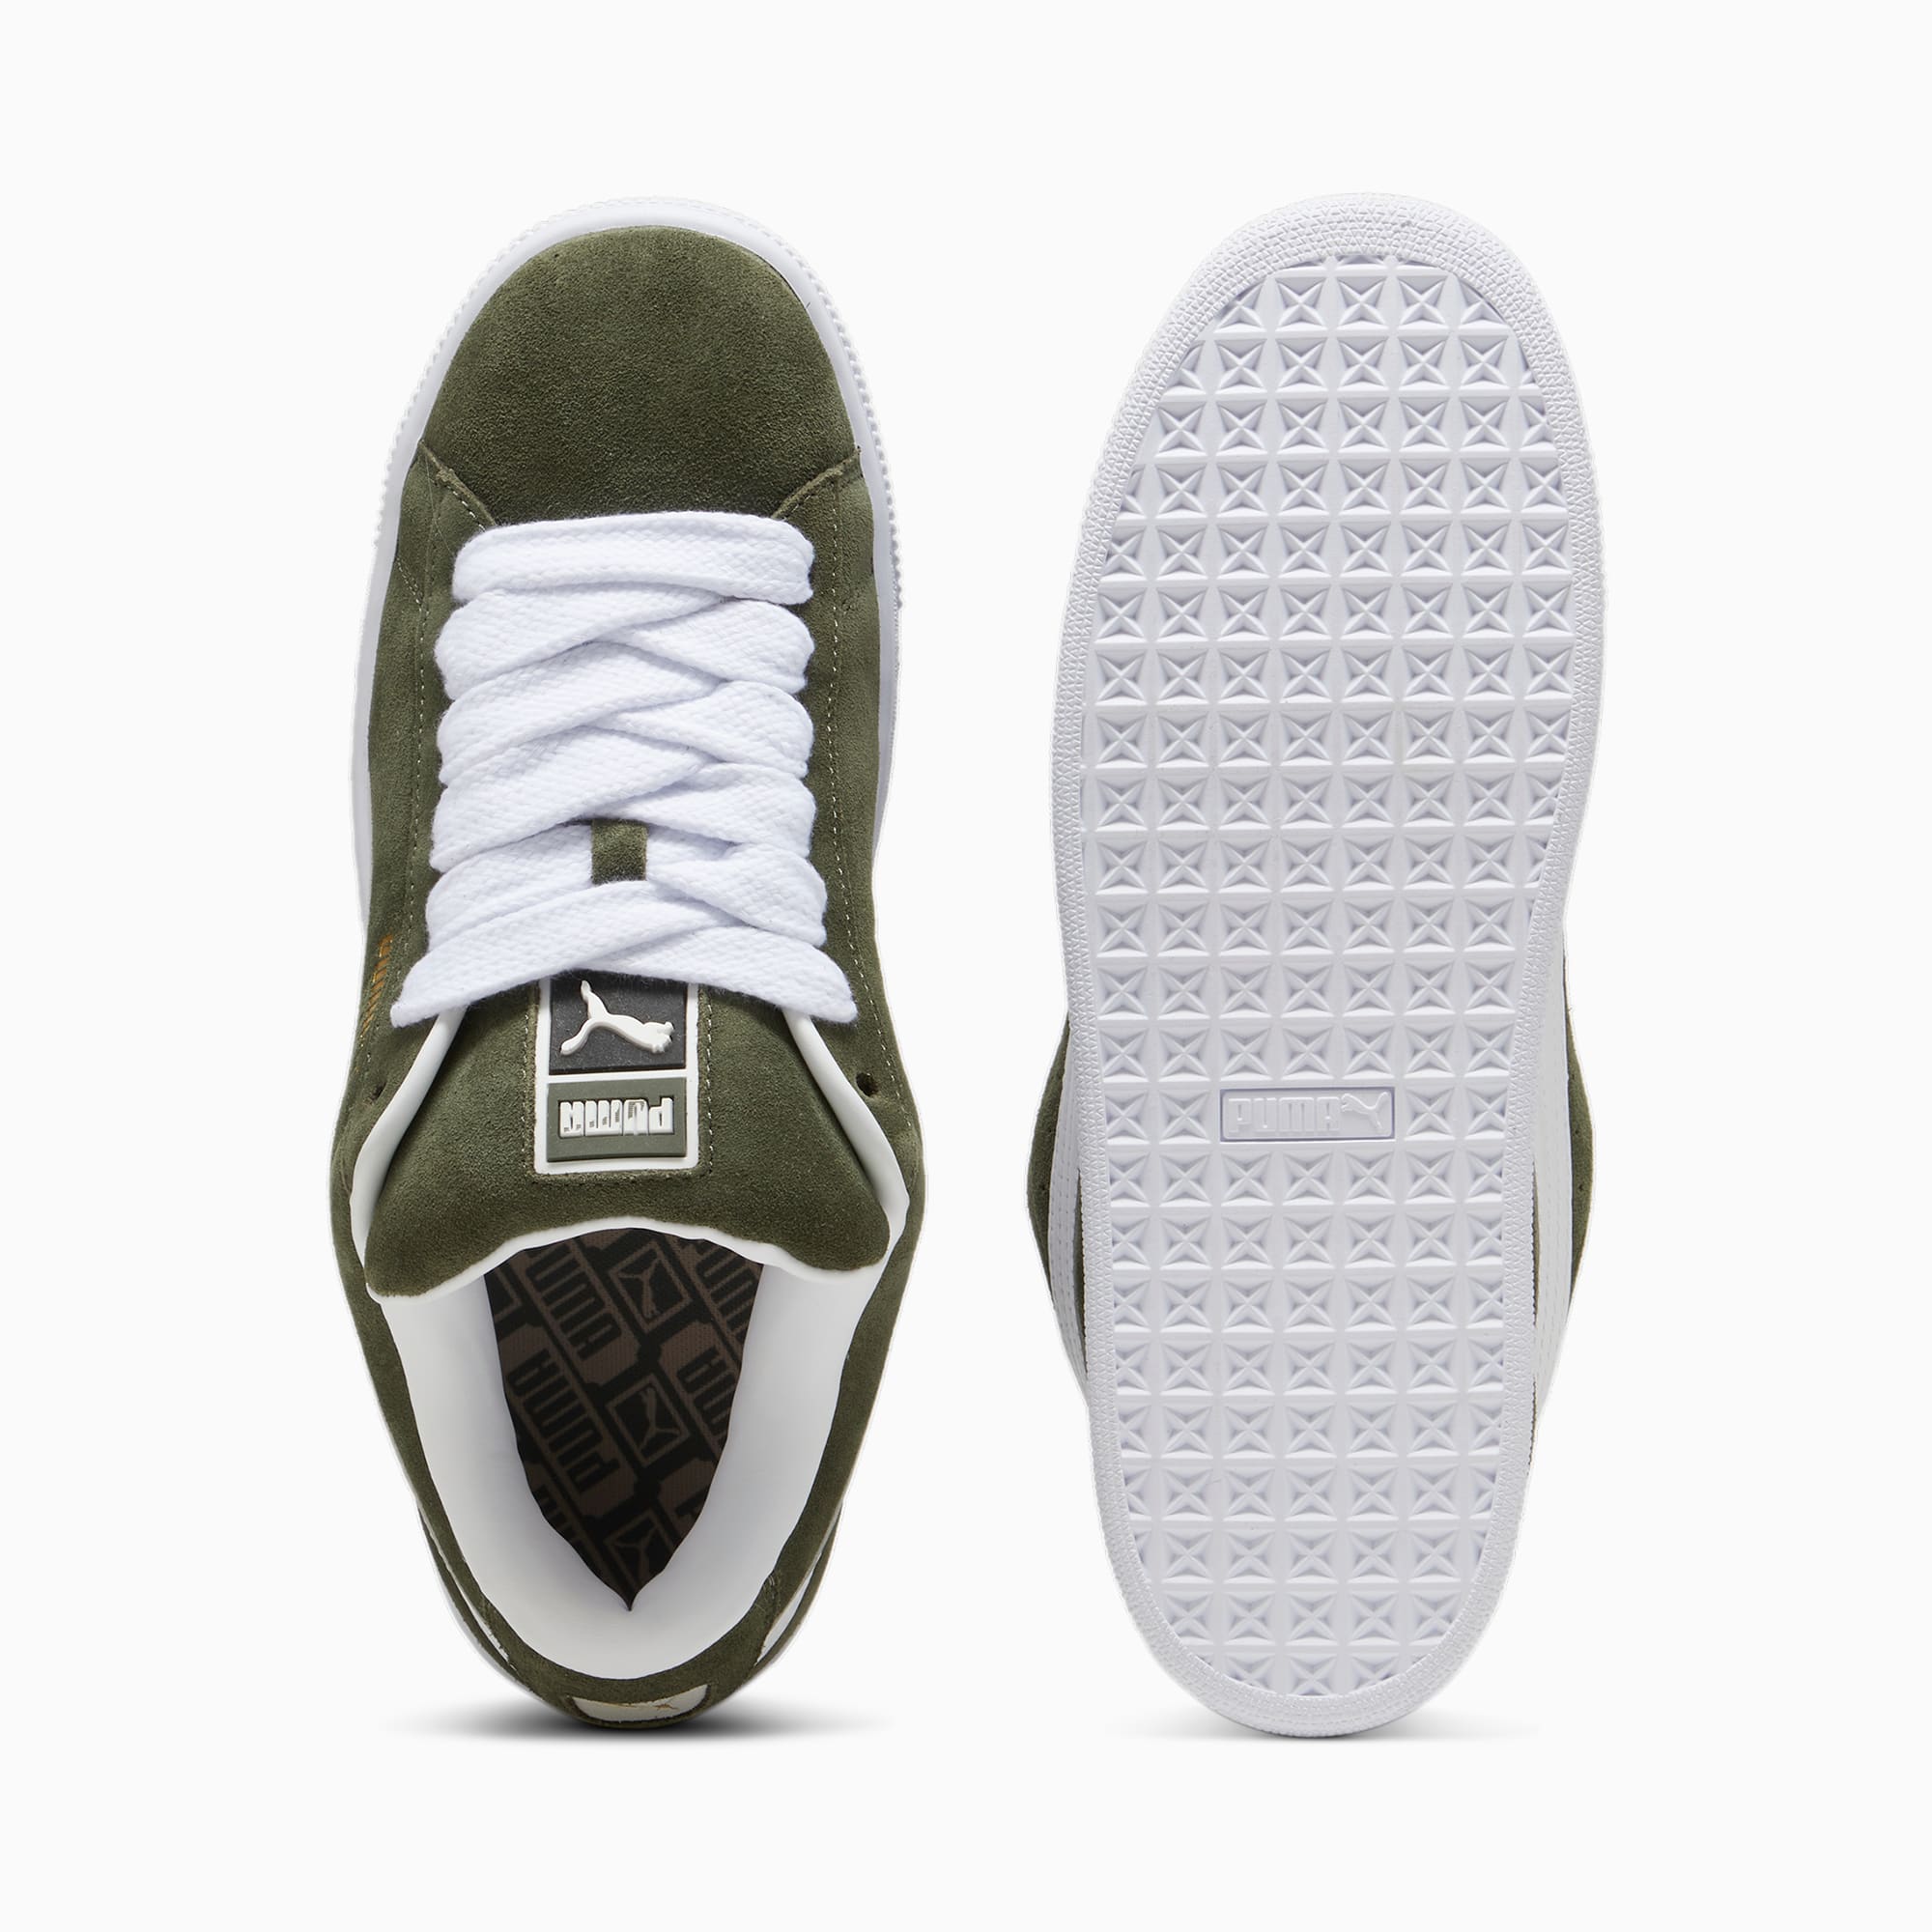 PUMA Suede Xl Sneakers Unisex, Dark Olive/White